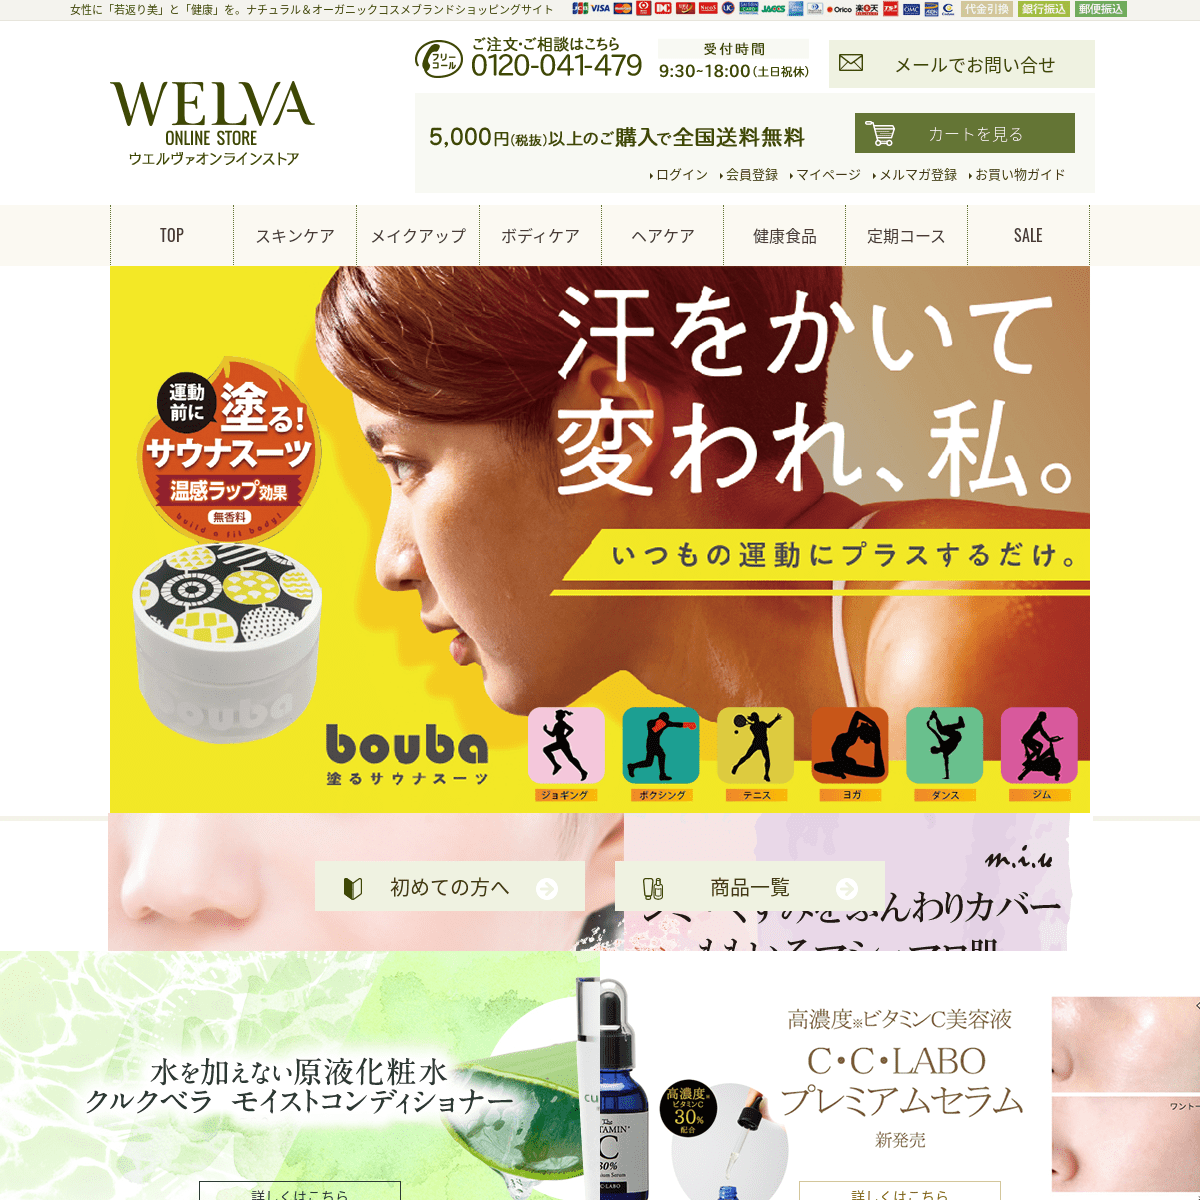 A complete backup of welva.ne.jp